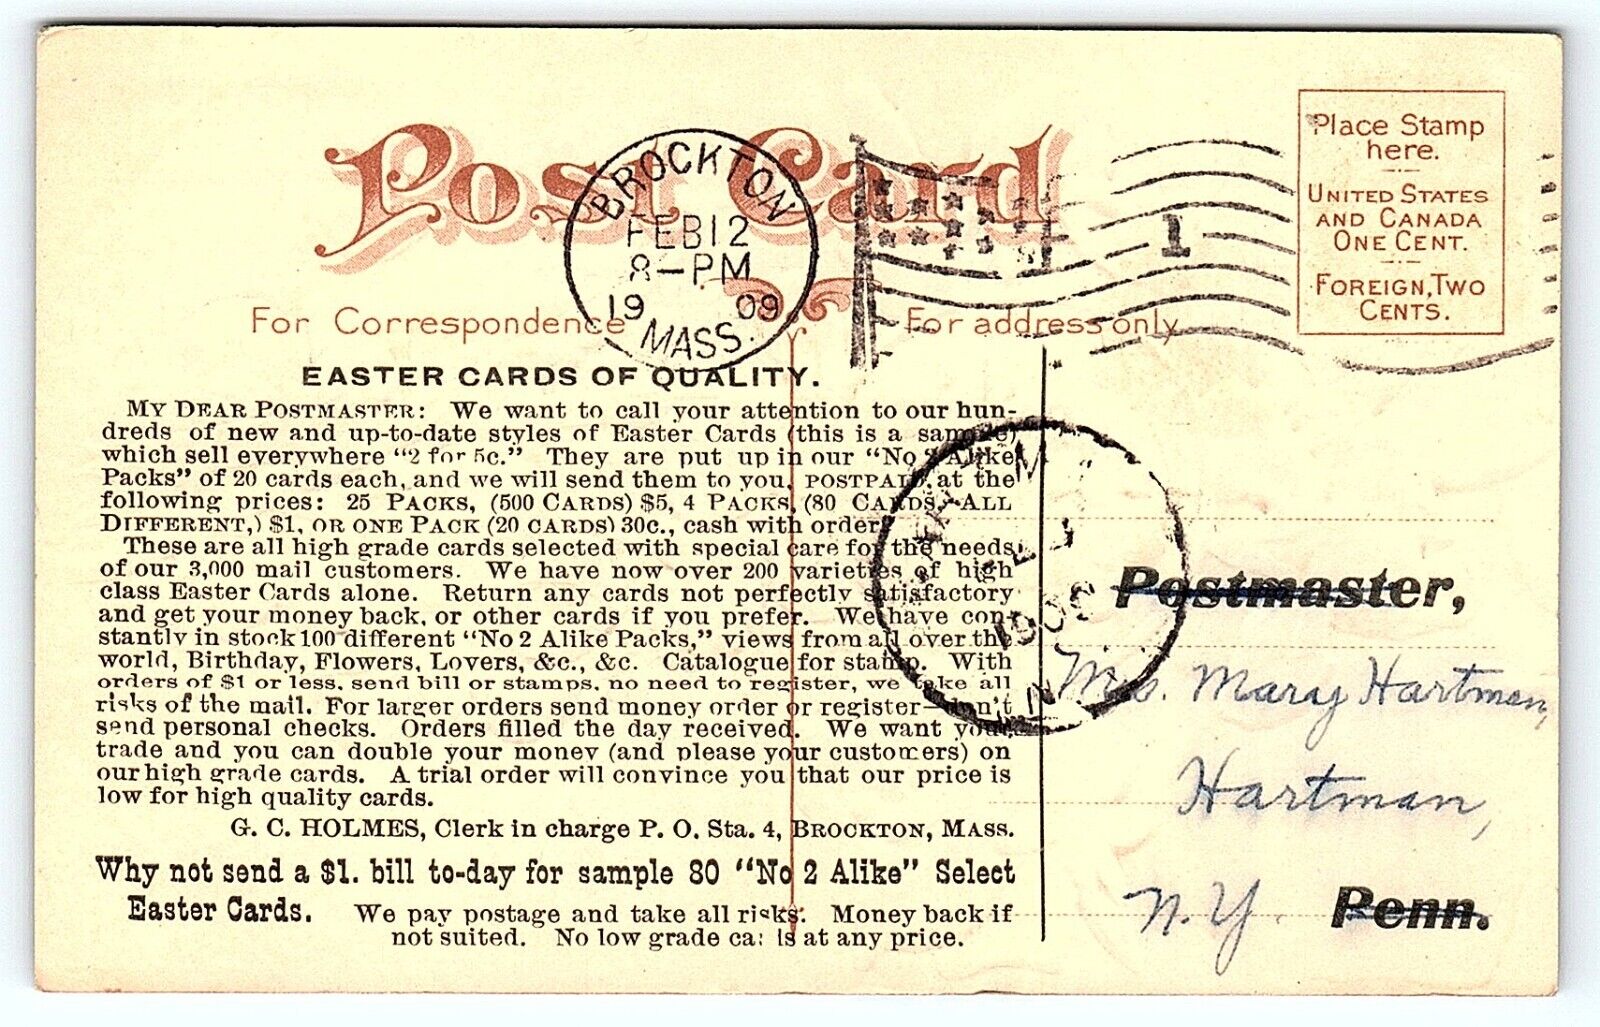 1909 Postmaster C G Holmes Brockton Mass Sales Sample Advertising for Postcards